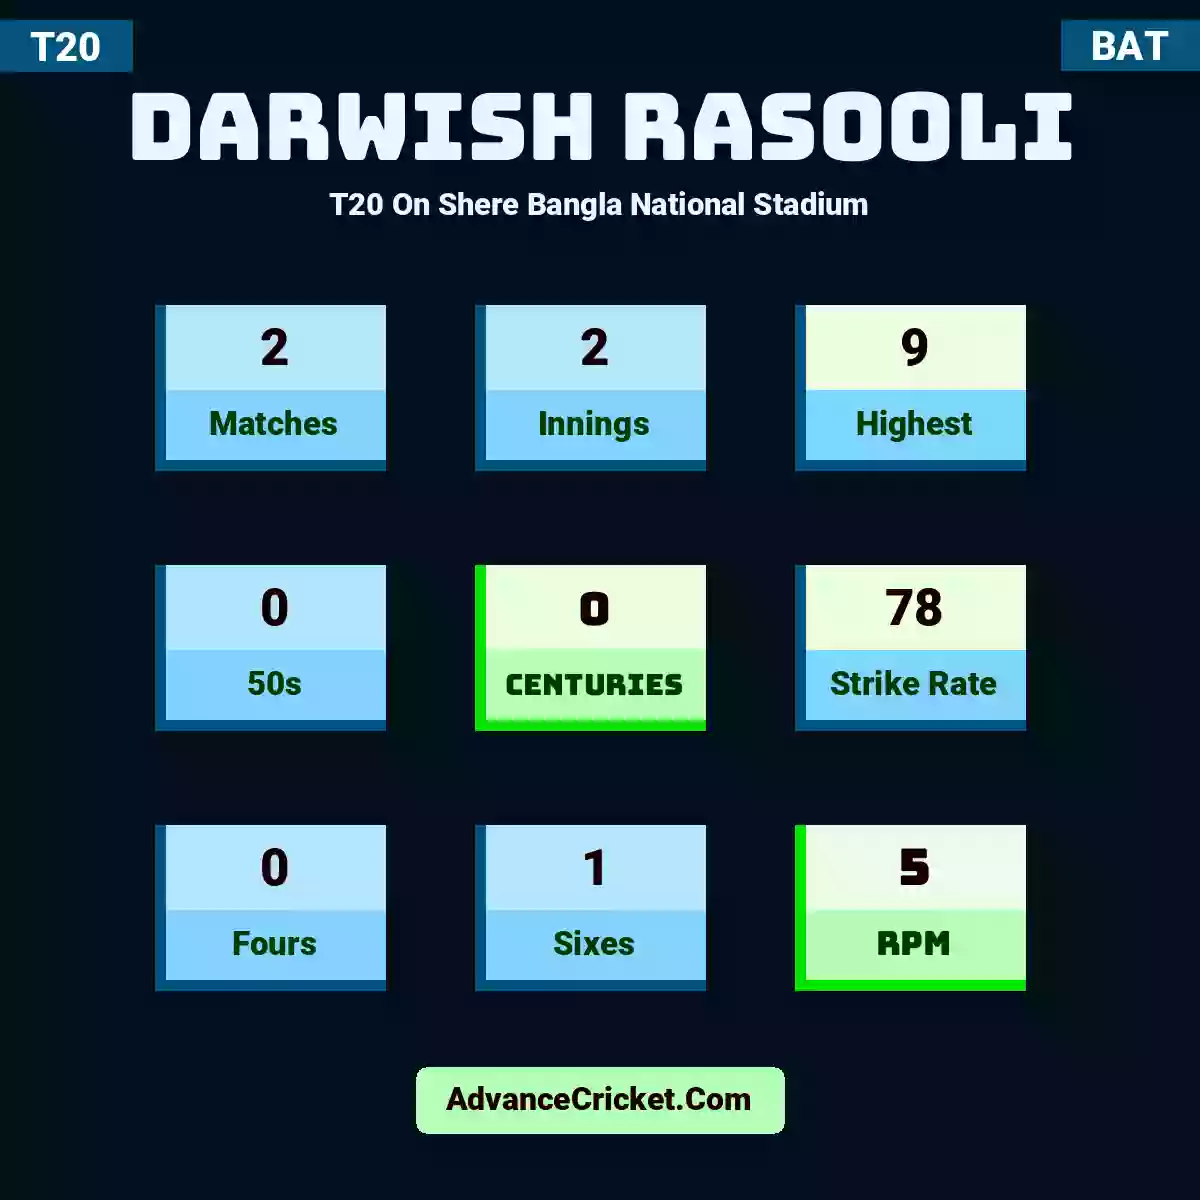 Darwish Rasooli T20  On Shere Bangla National Stadium, Darwish Rasooli played 2 matches, scored 9 runs as highest, 0 half-centuries, and 0 centuries, with a strike rate of 78. D.Rasooli hit 0 fours and 1 sixes, with an RPM of 5.